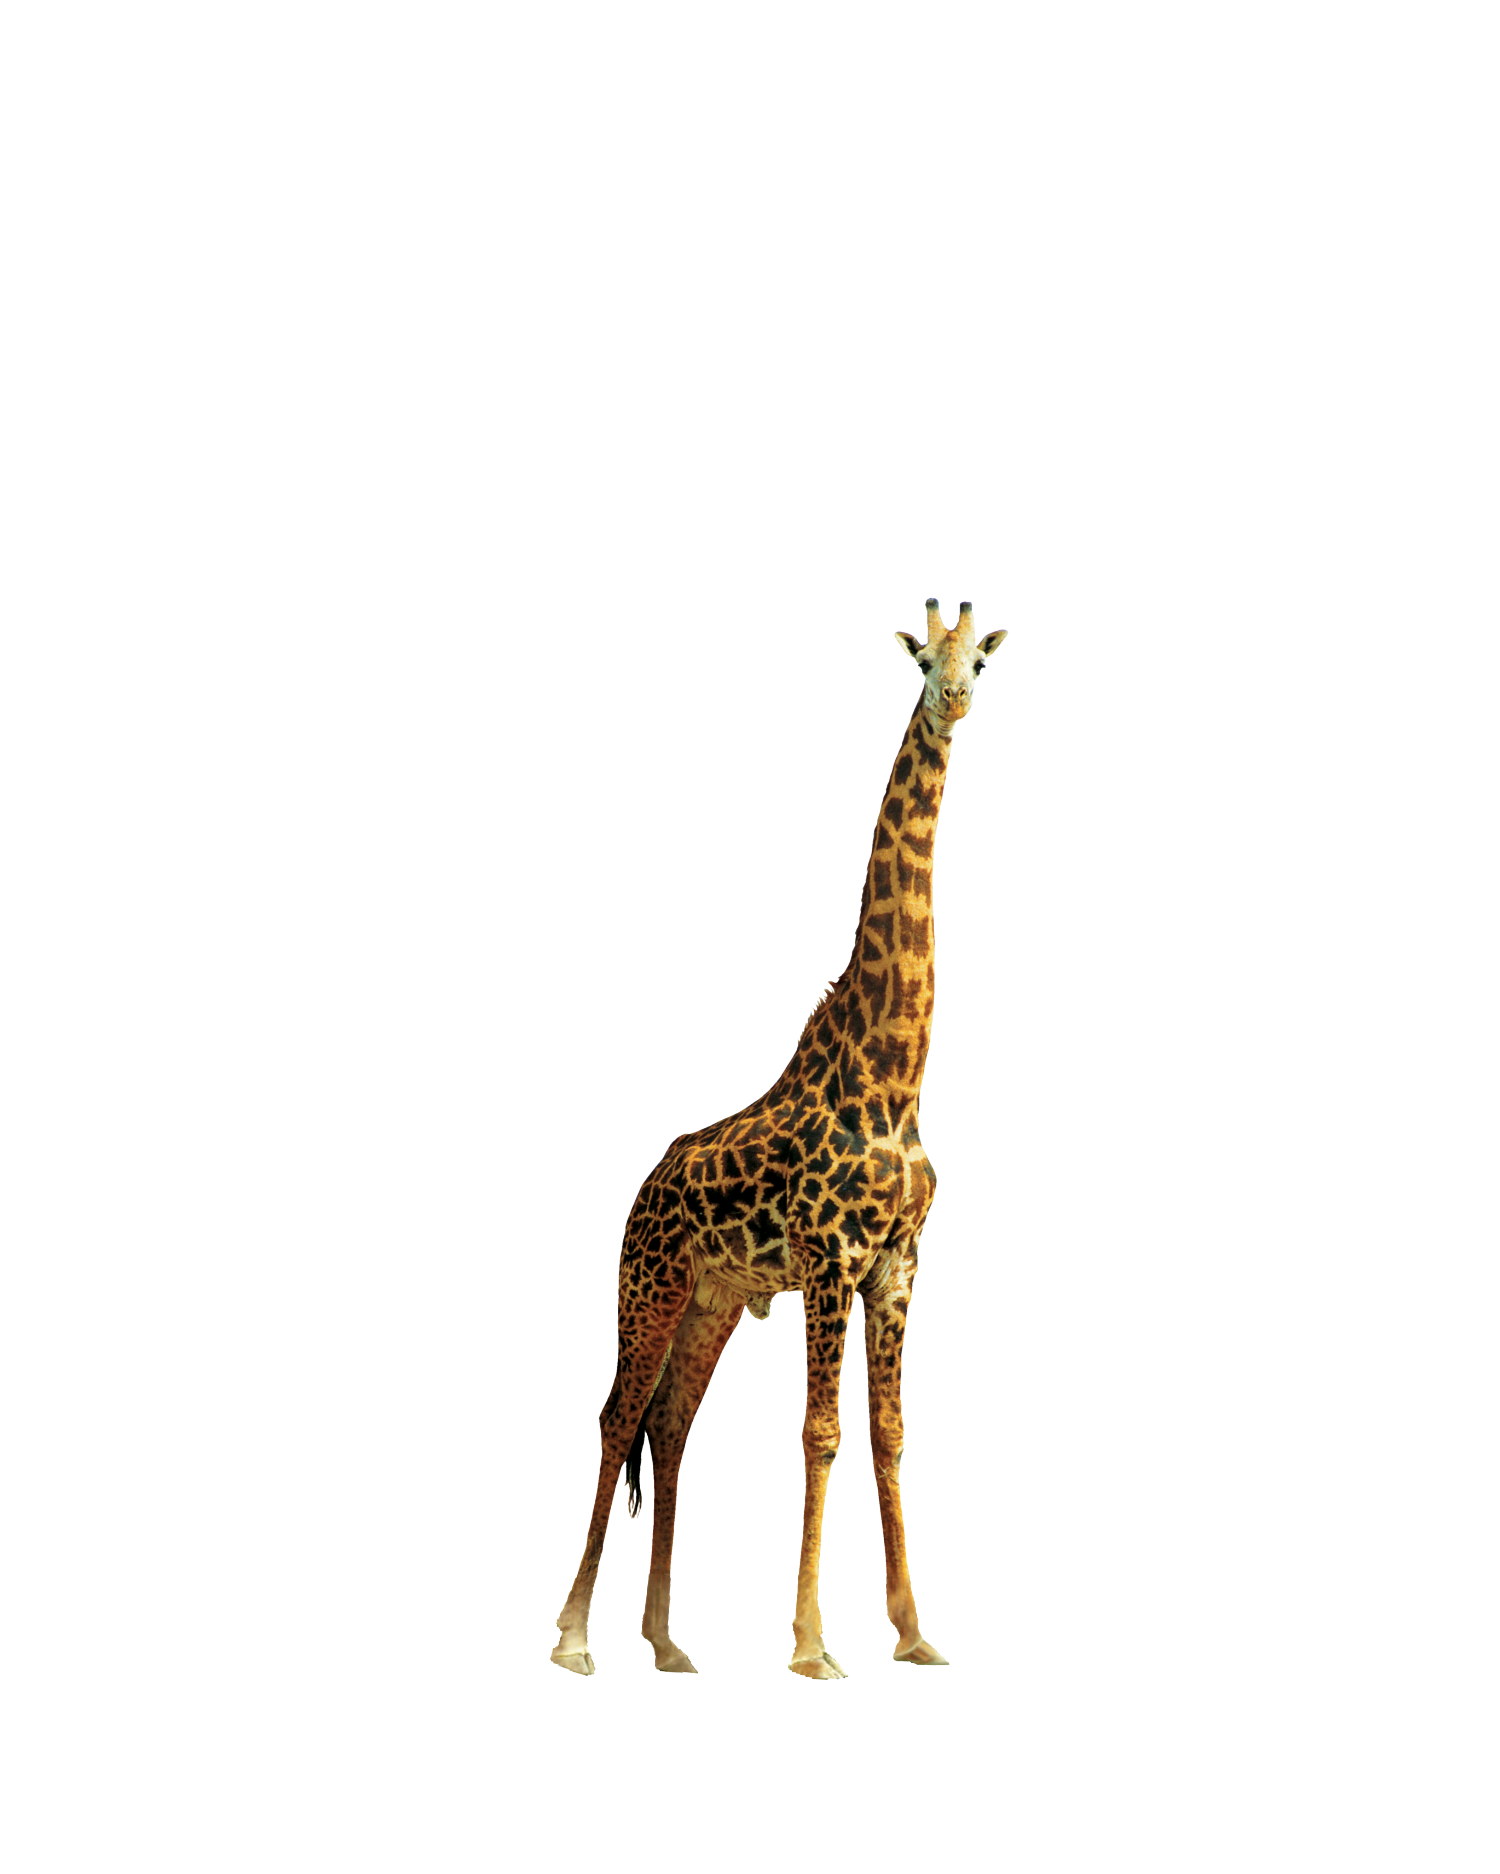 Giraffe png Animal lover editing background 2021 by Rajaneditz.com